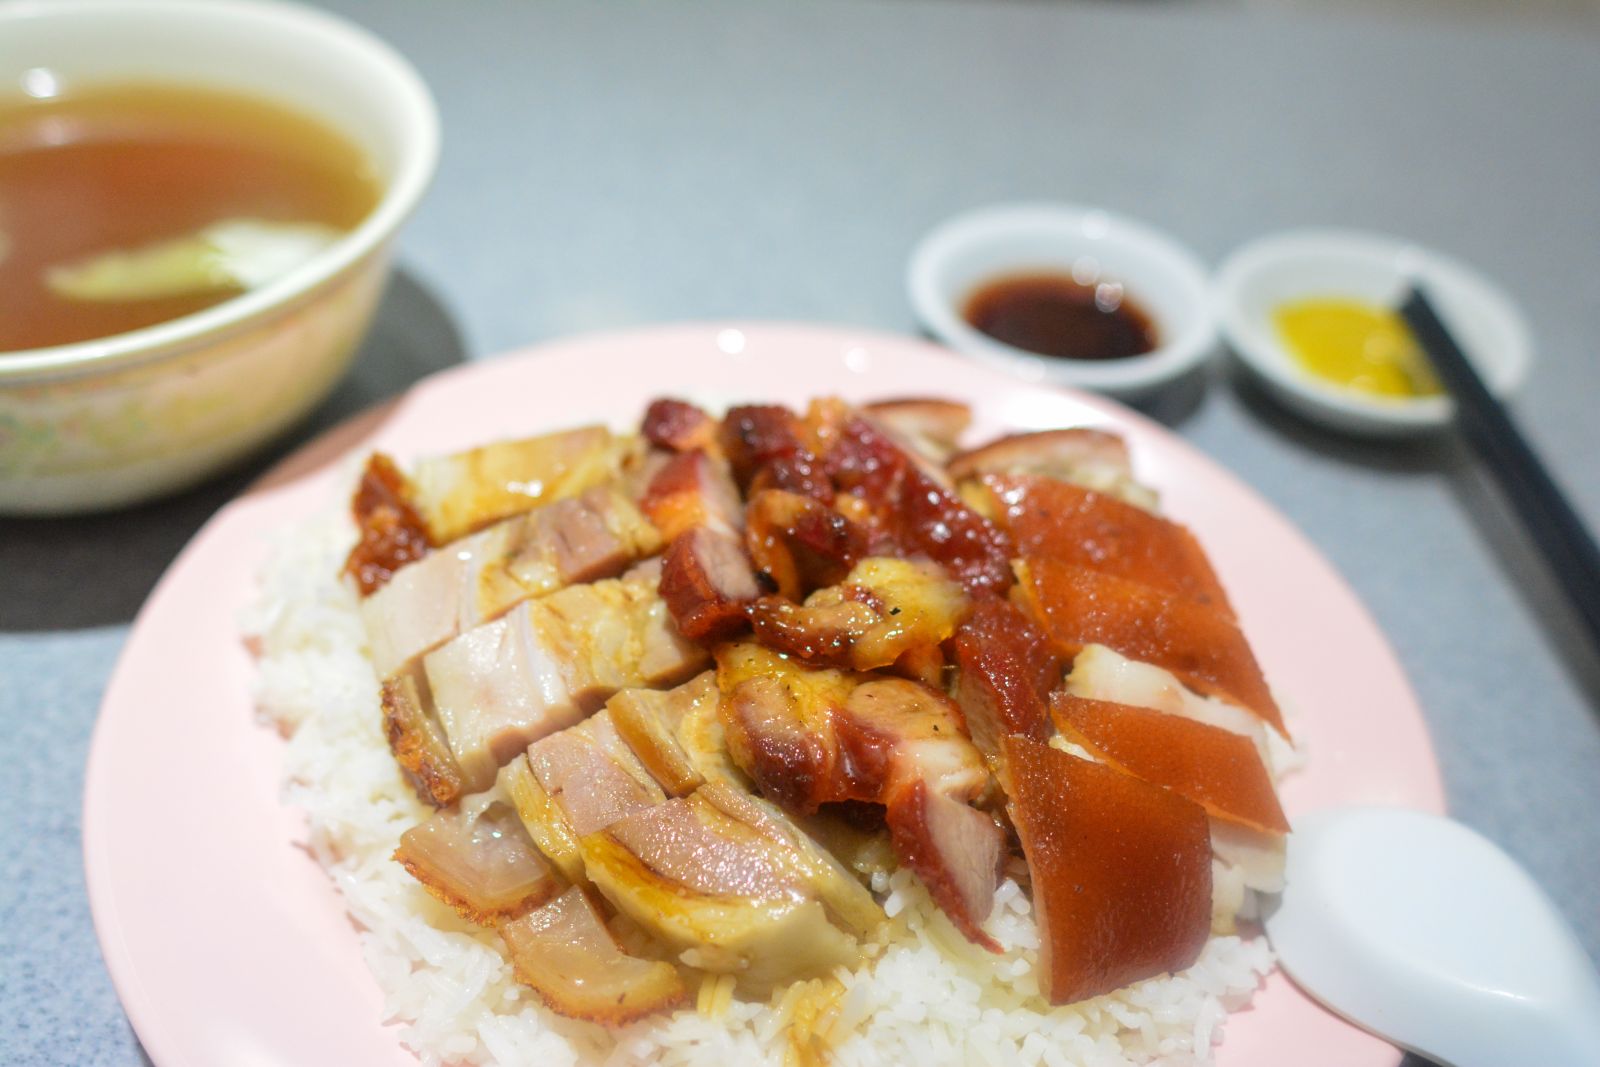 Roasted Pork (燒肉), Char SIu (叉燒,) and Roasted Suckling Pig (乳豬) over Rice